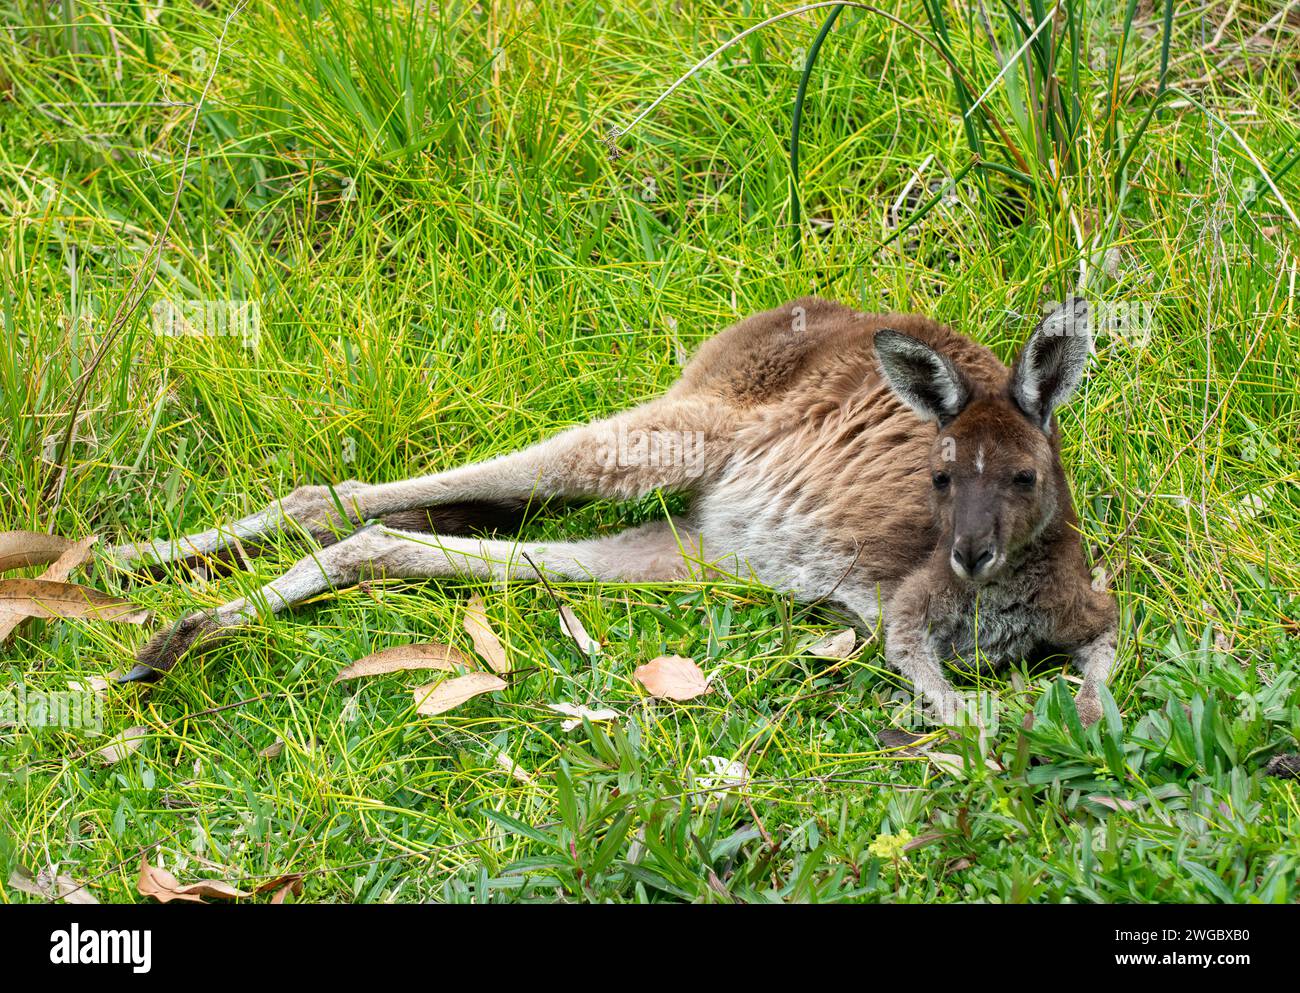 Canguro australiano giace in erba lunga, Australia Foto Stock